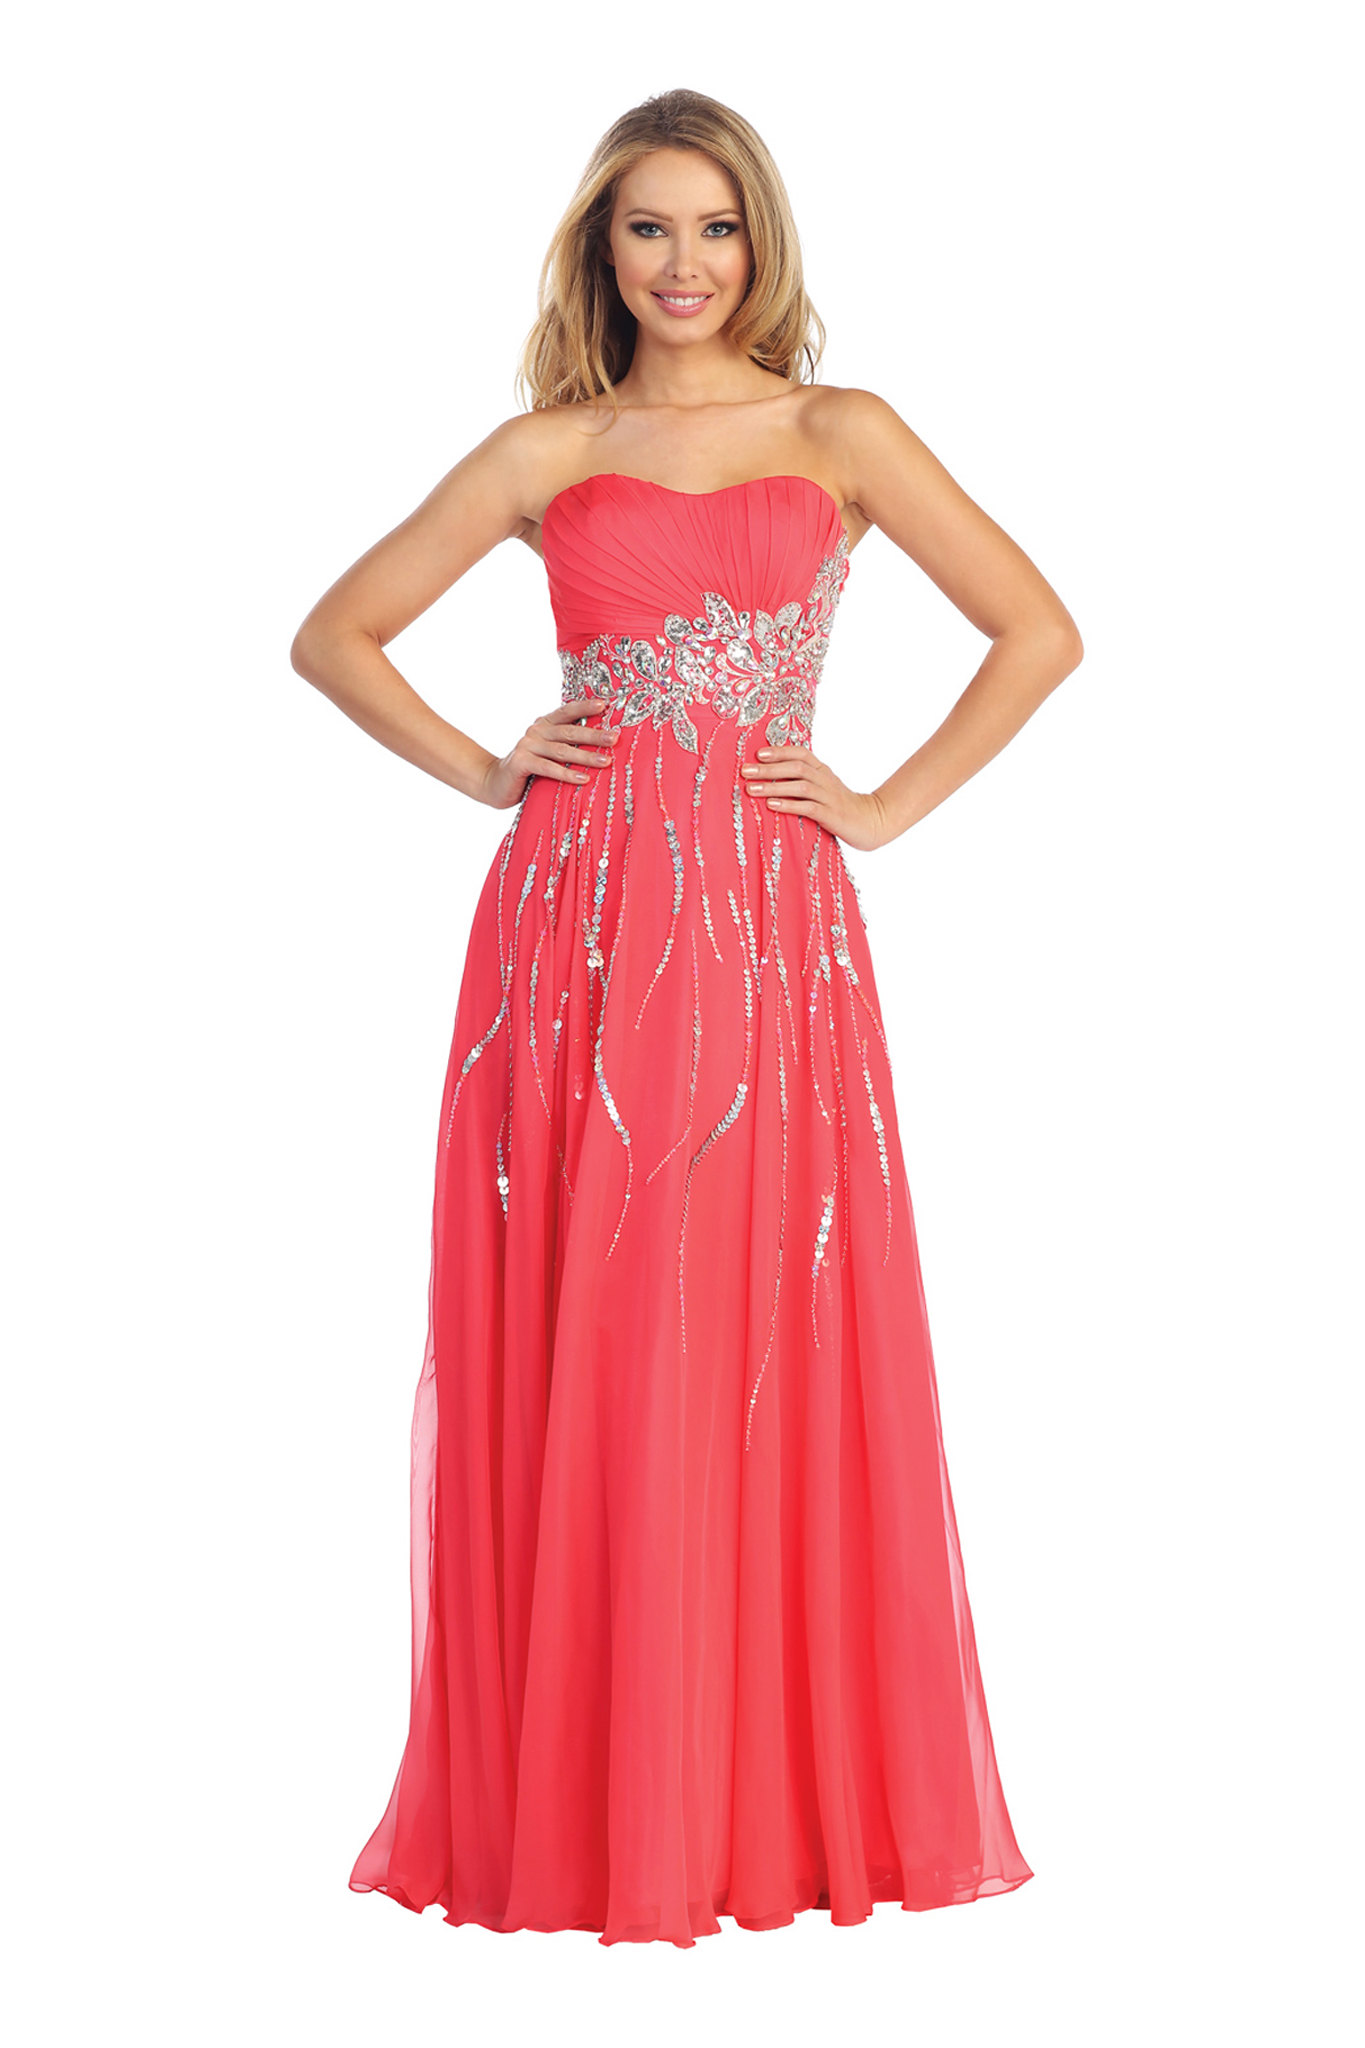 Strapless Sweetheart Dress Prom Gown Plus Sizes Design Rhinestones ...